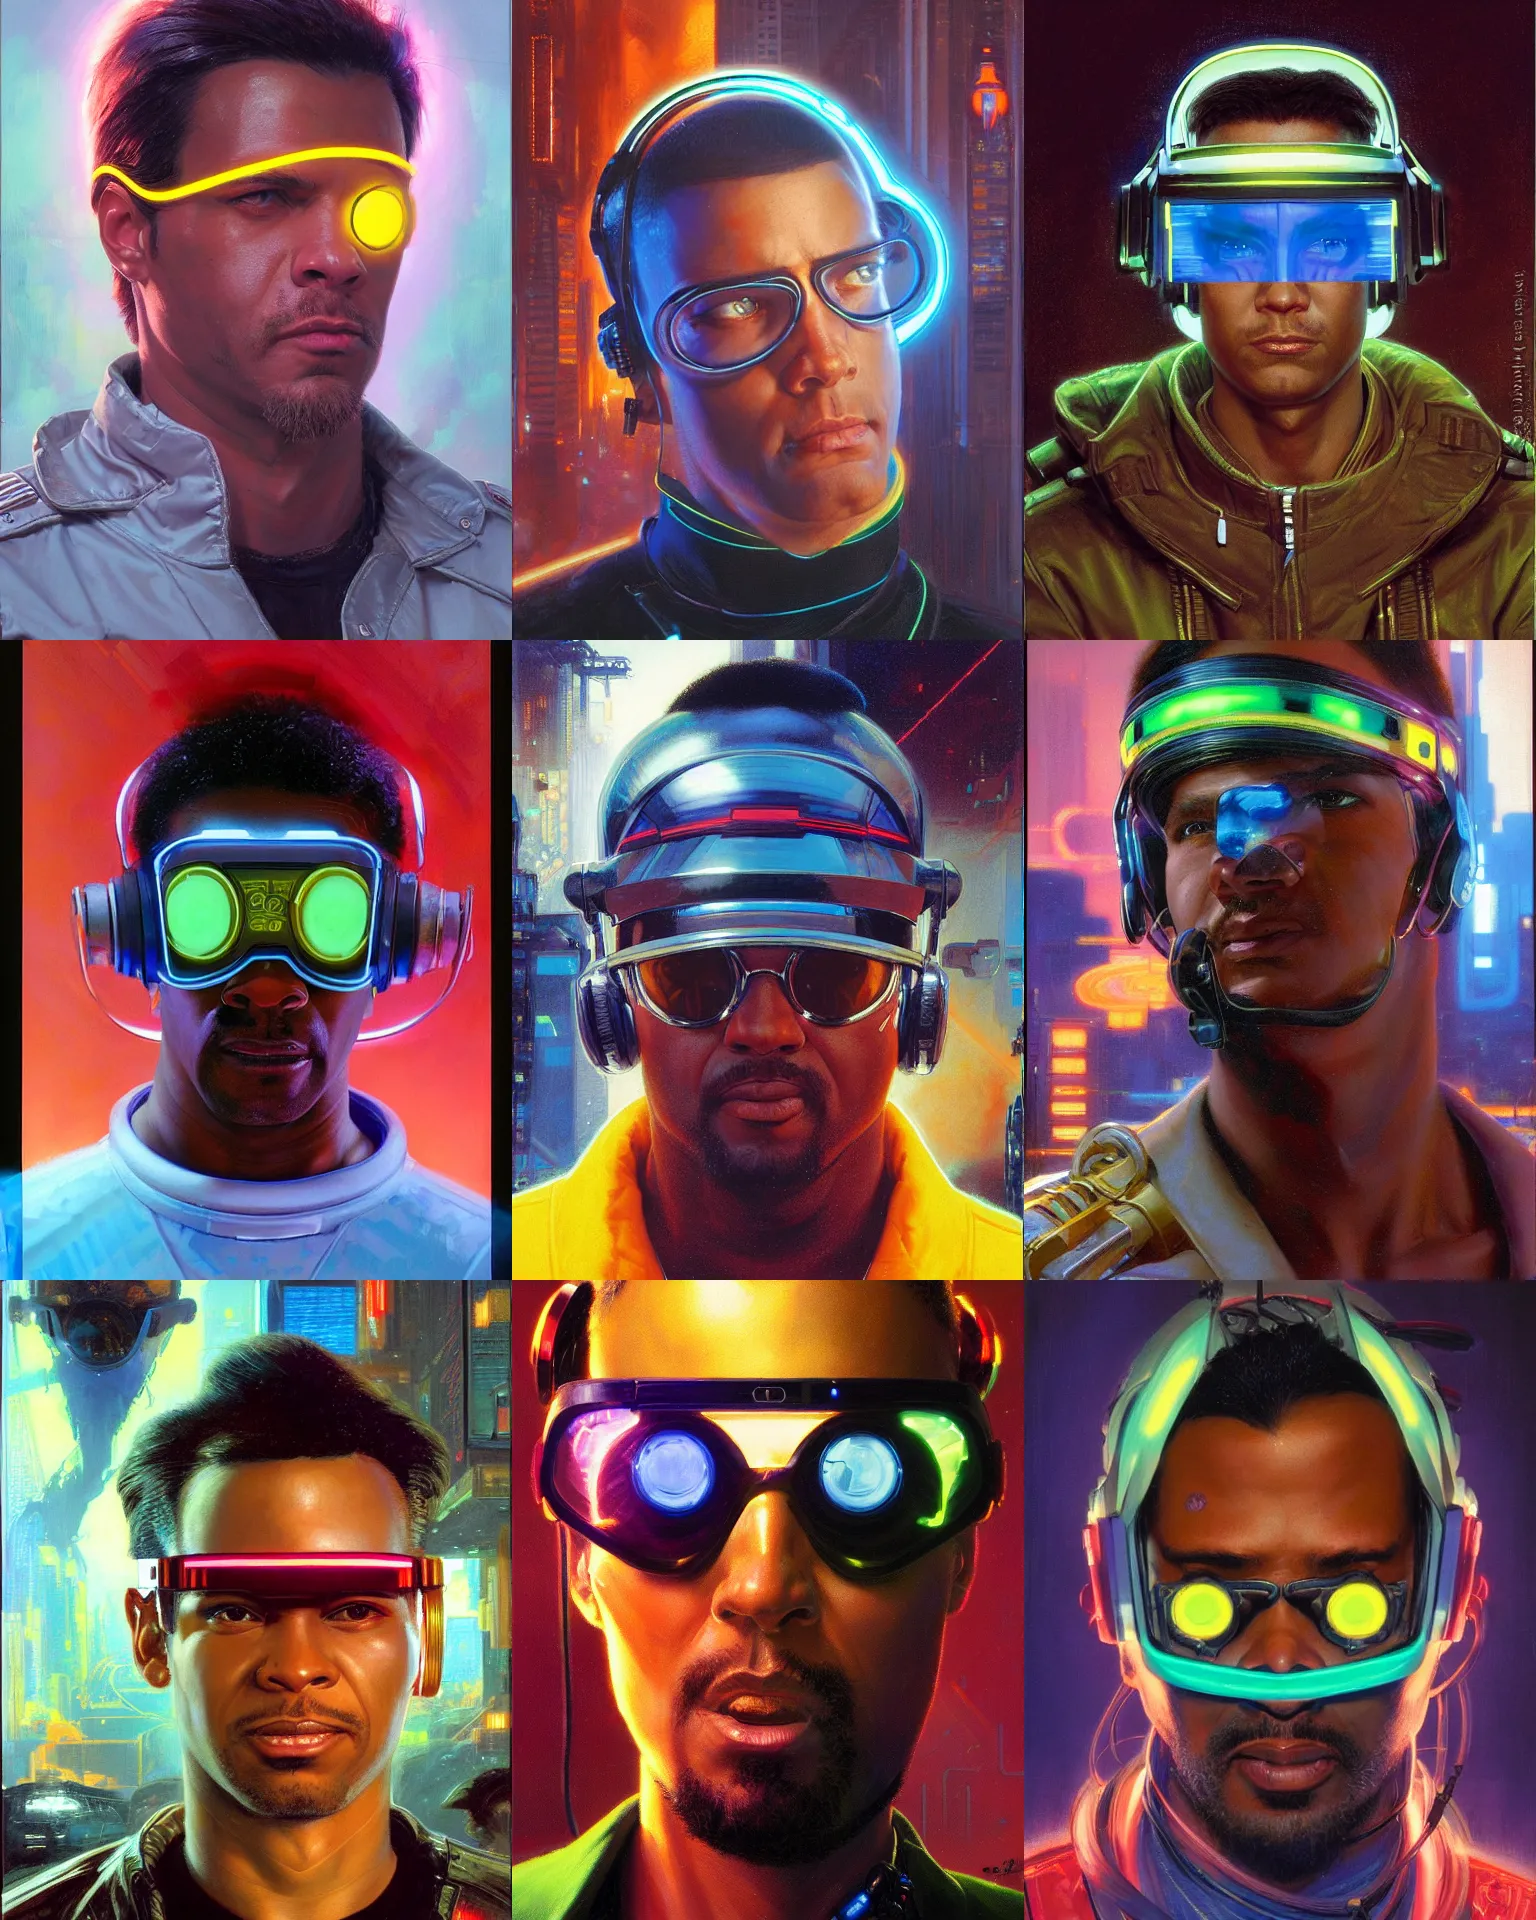 Prompt: digital neon cyberpunk male with geordi eye visor and headset headshot portrait painting by donato giancola, kilian eng, john berkey, j. c. leyendecker, maxfield parrish